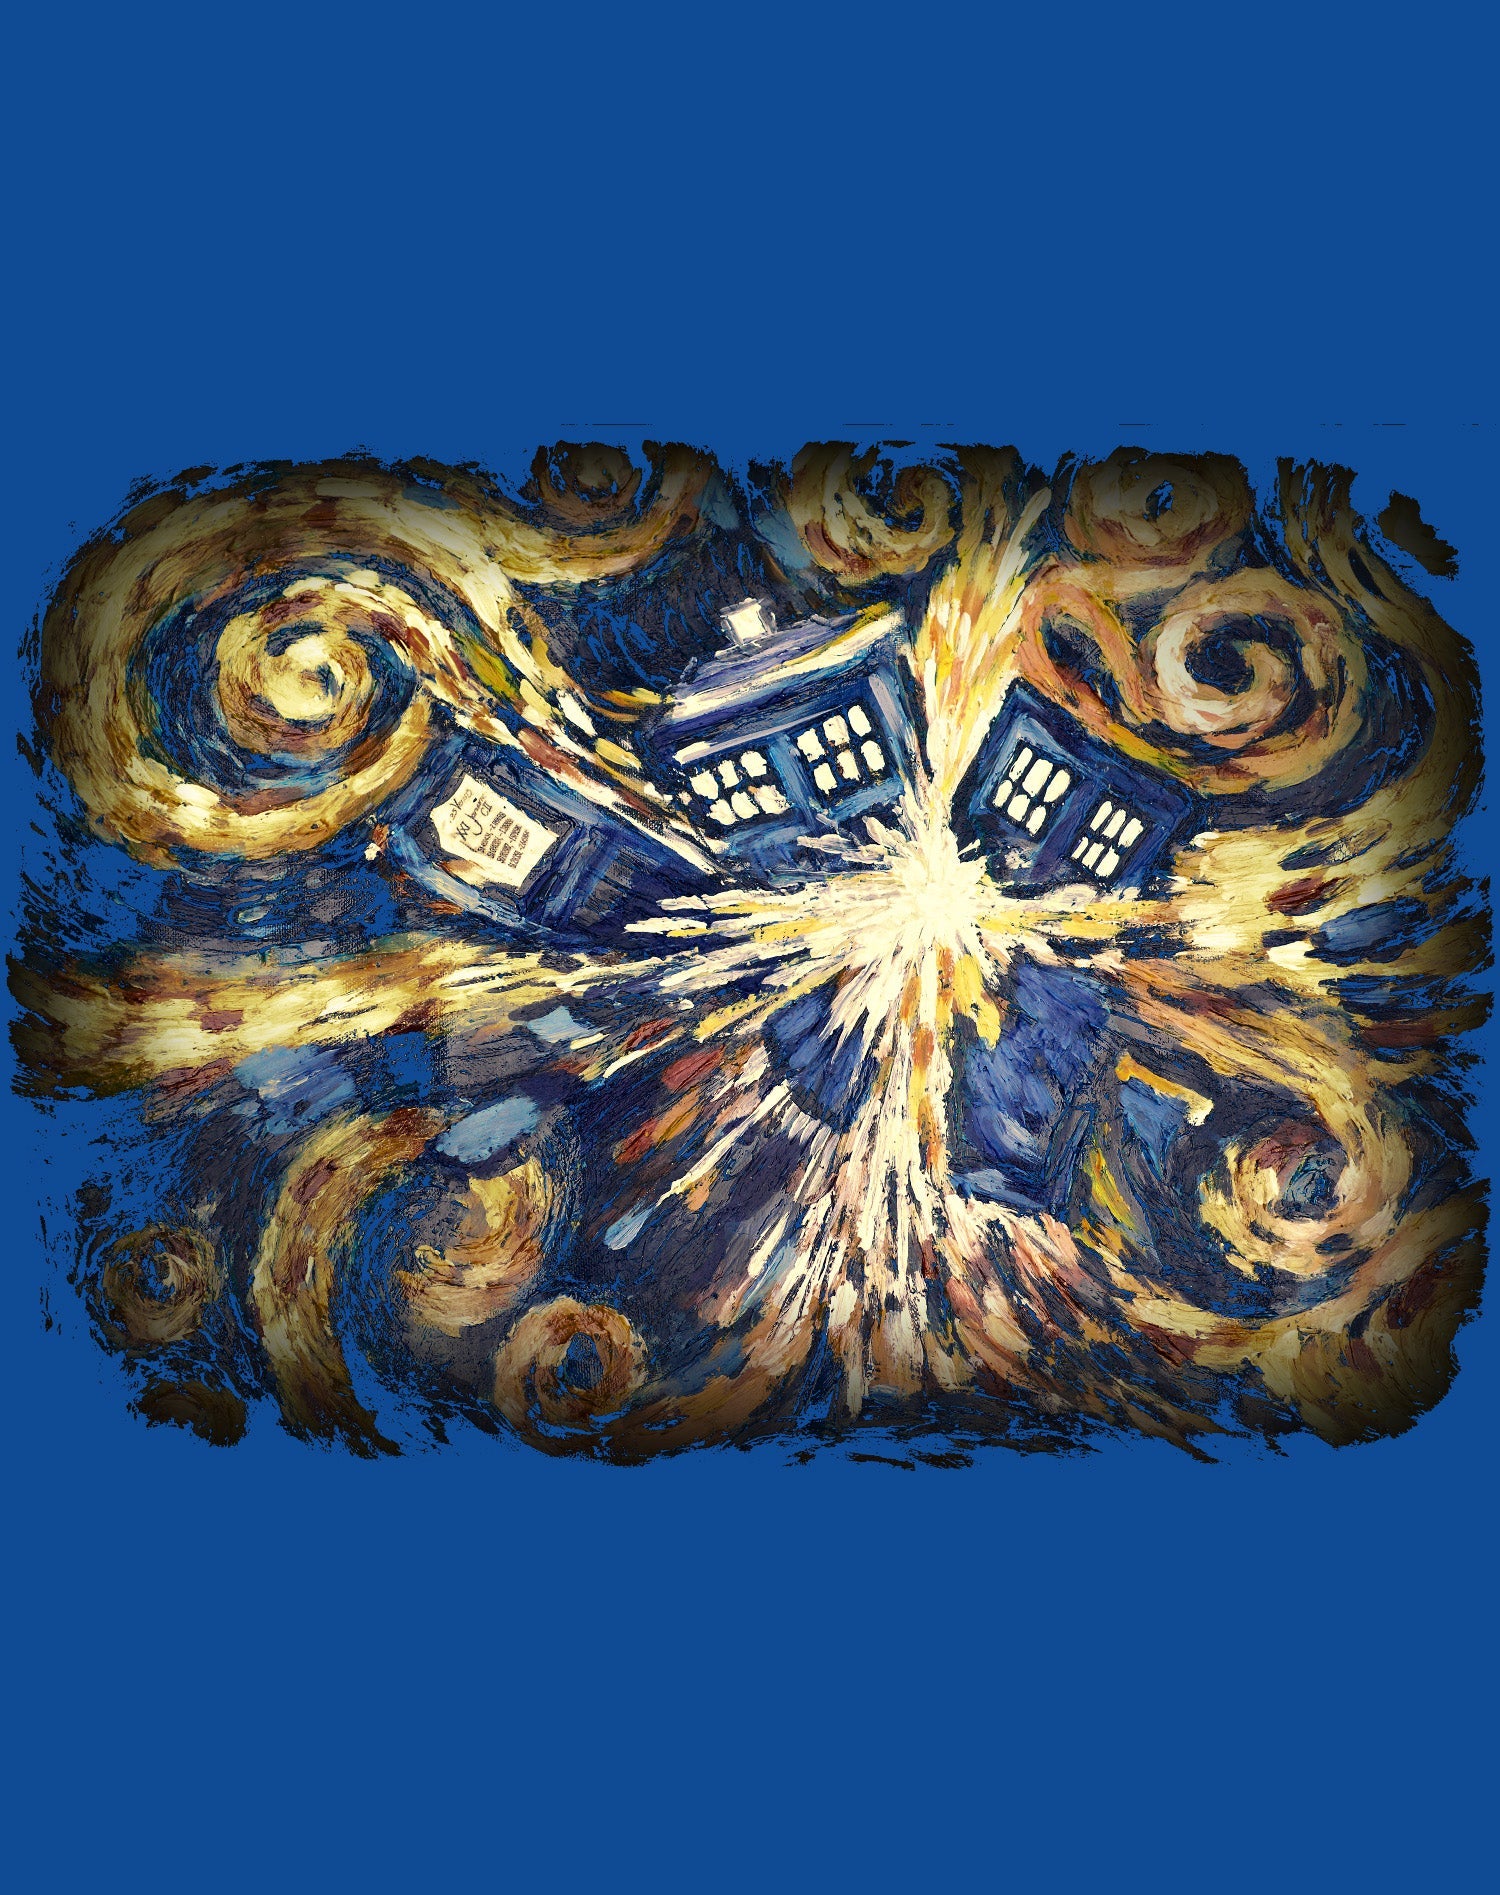 Doctor Who Art Tardis Van Gogh Official Women's T-shirt